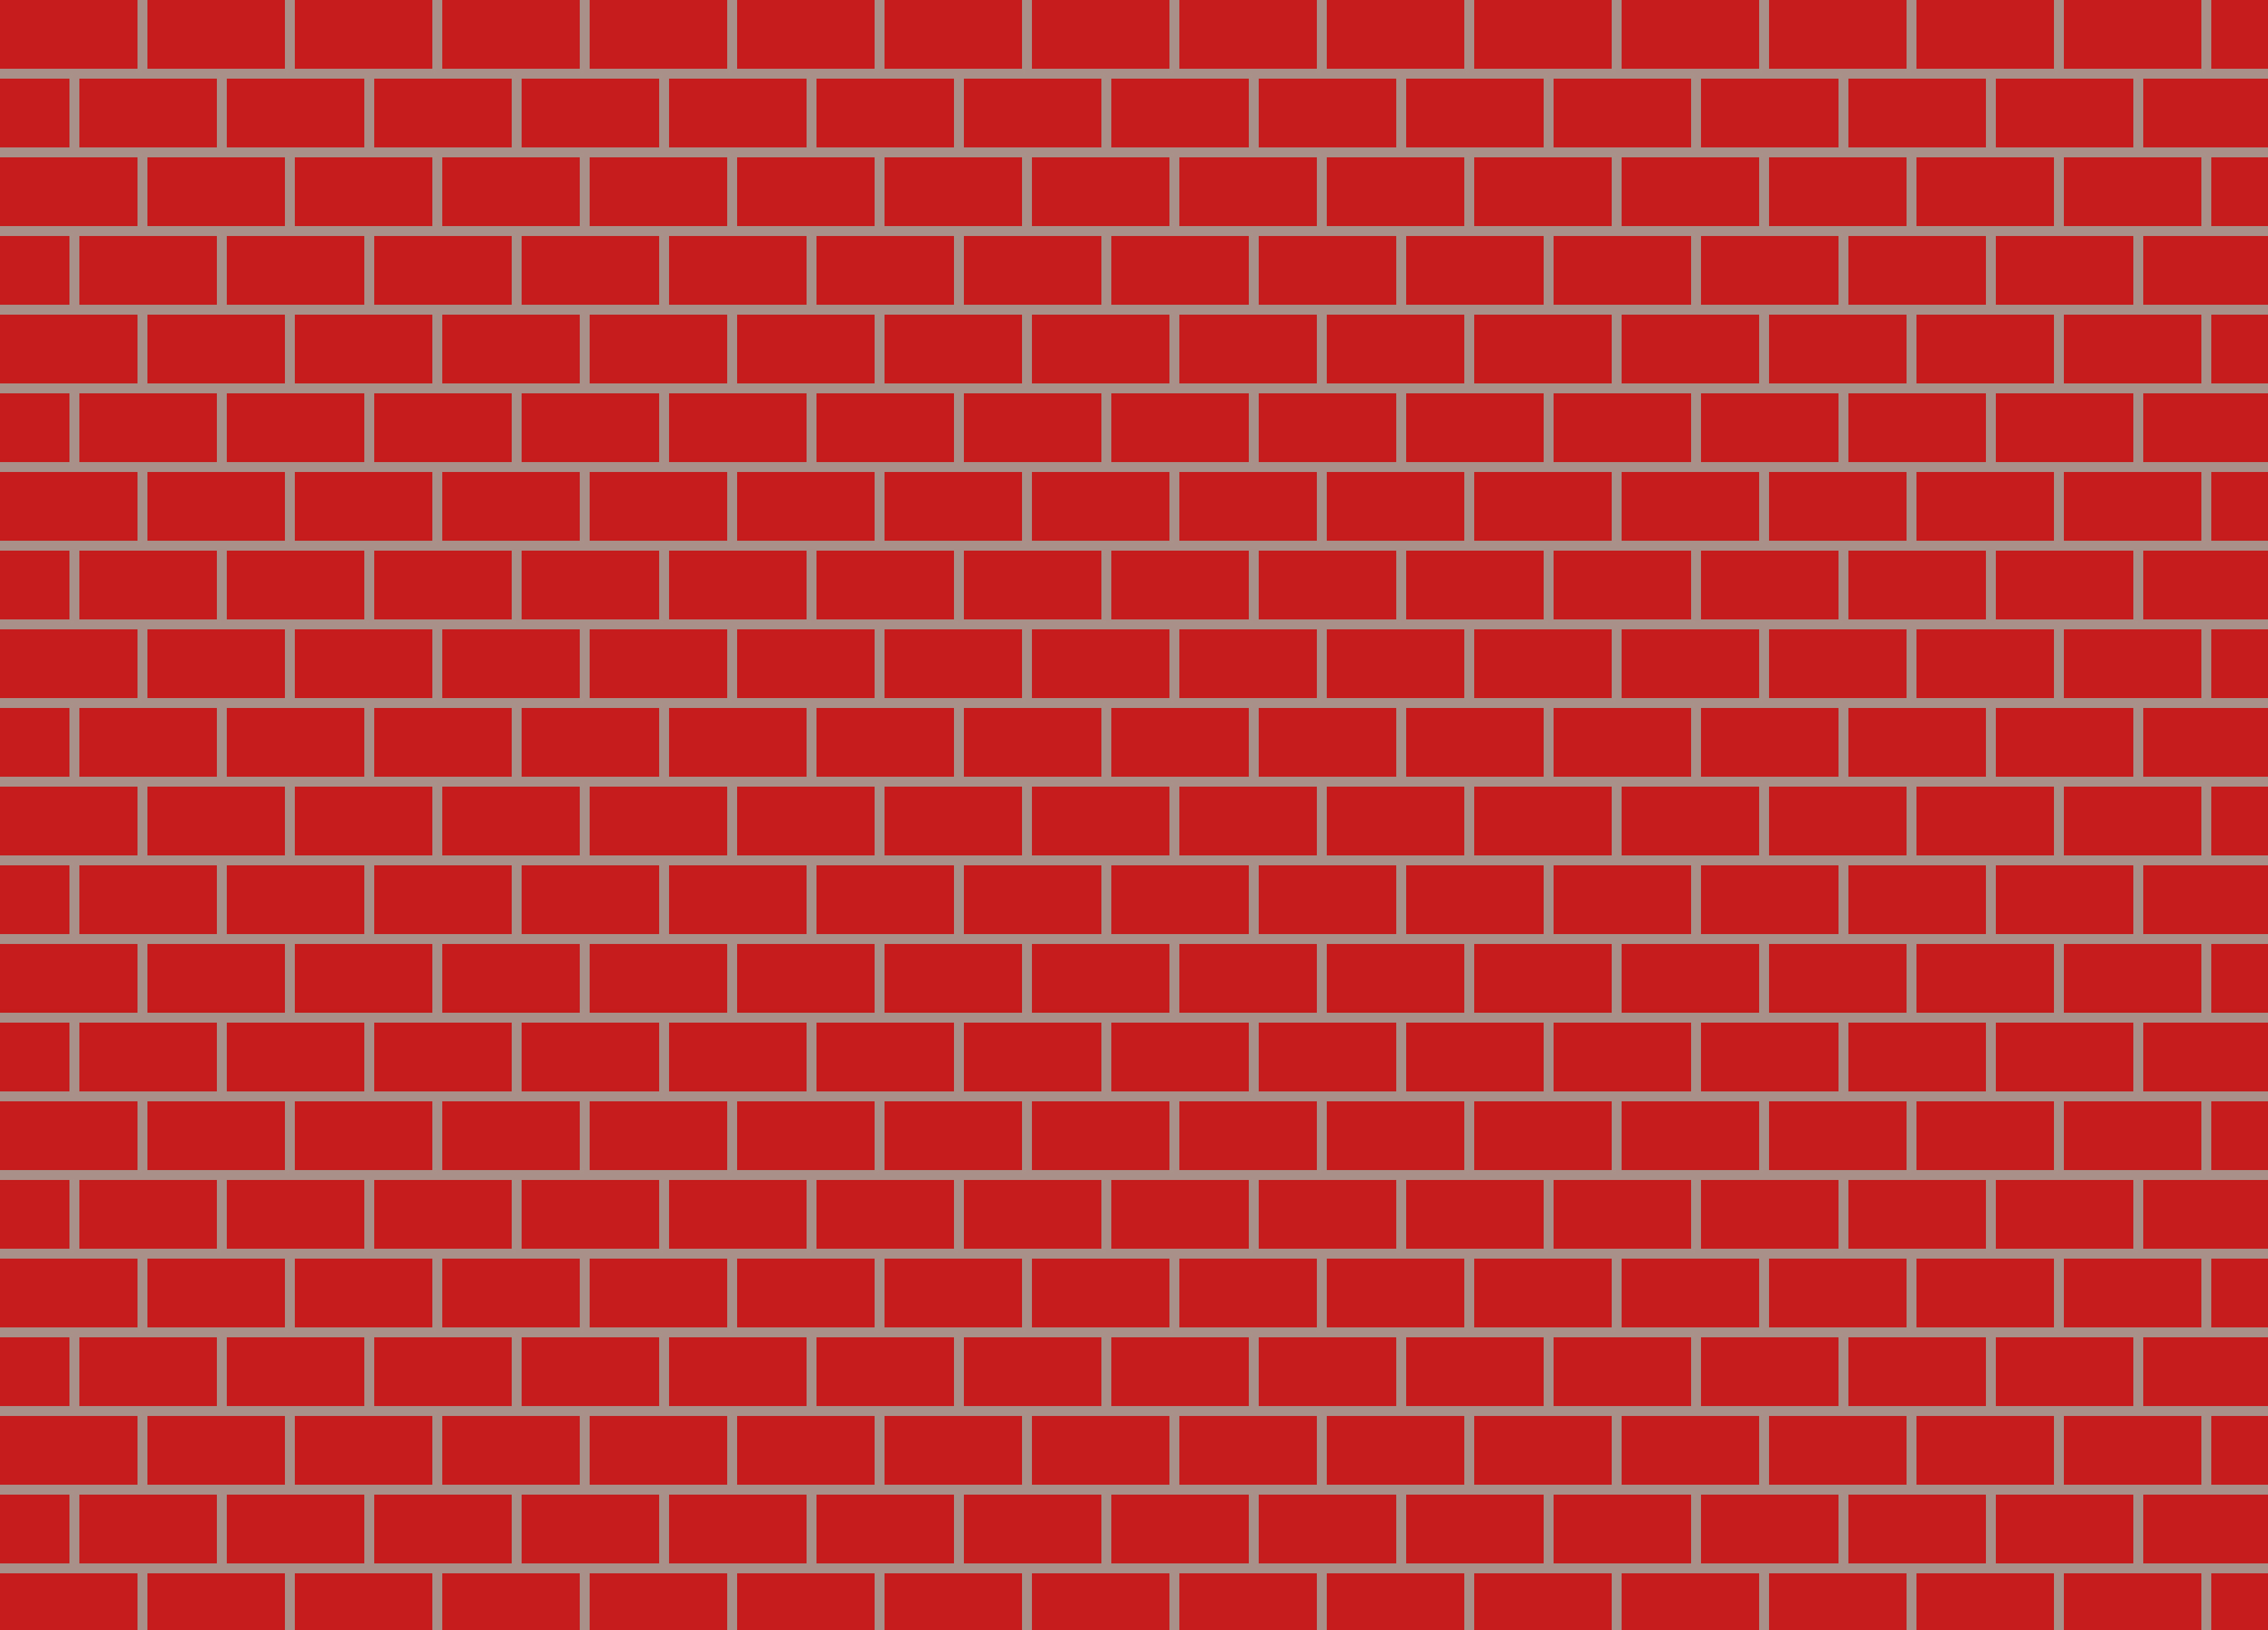 Free Brick Wall Cliparts, Download Free Clip Art, Free Clip.